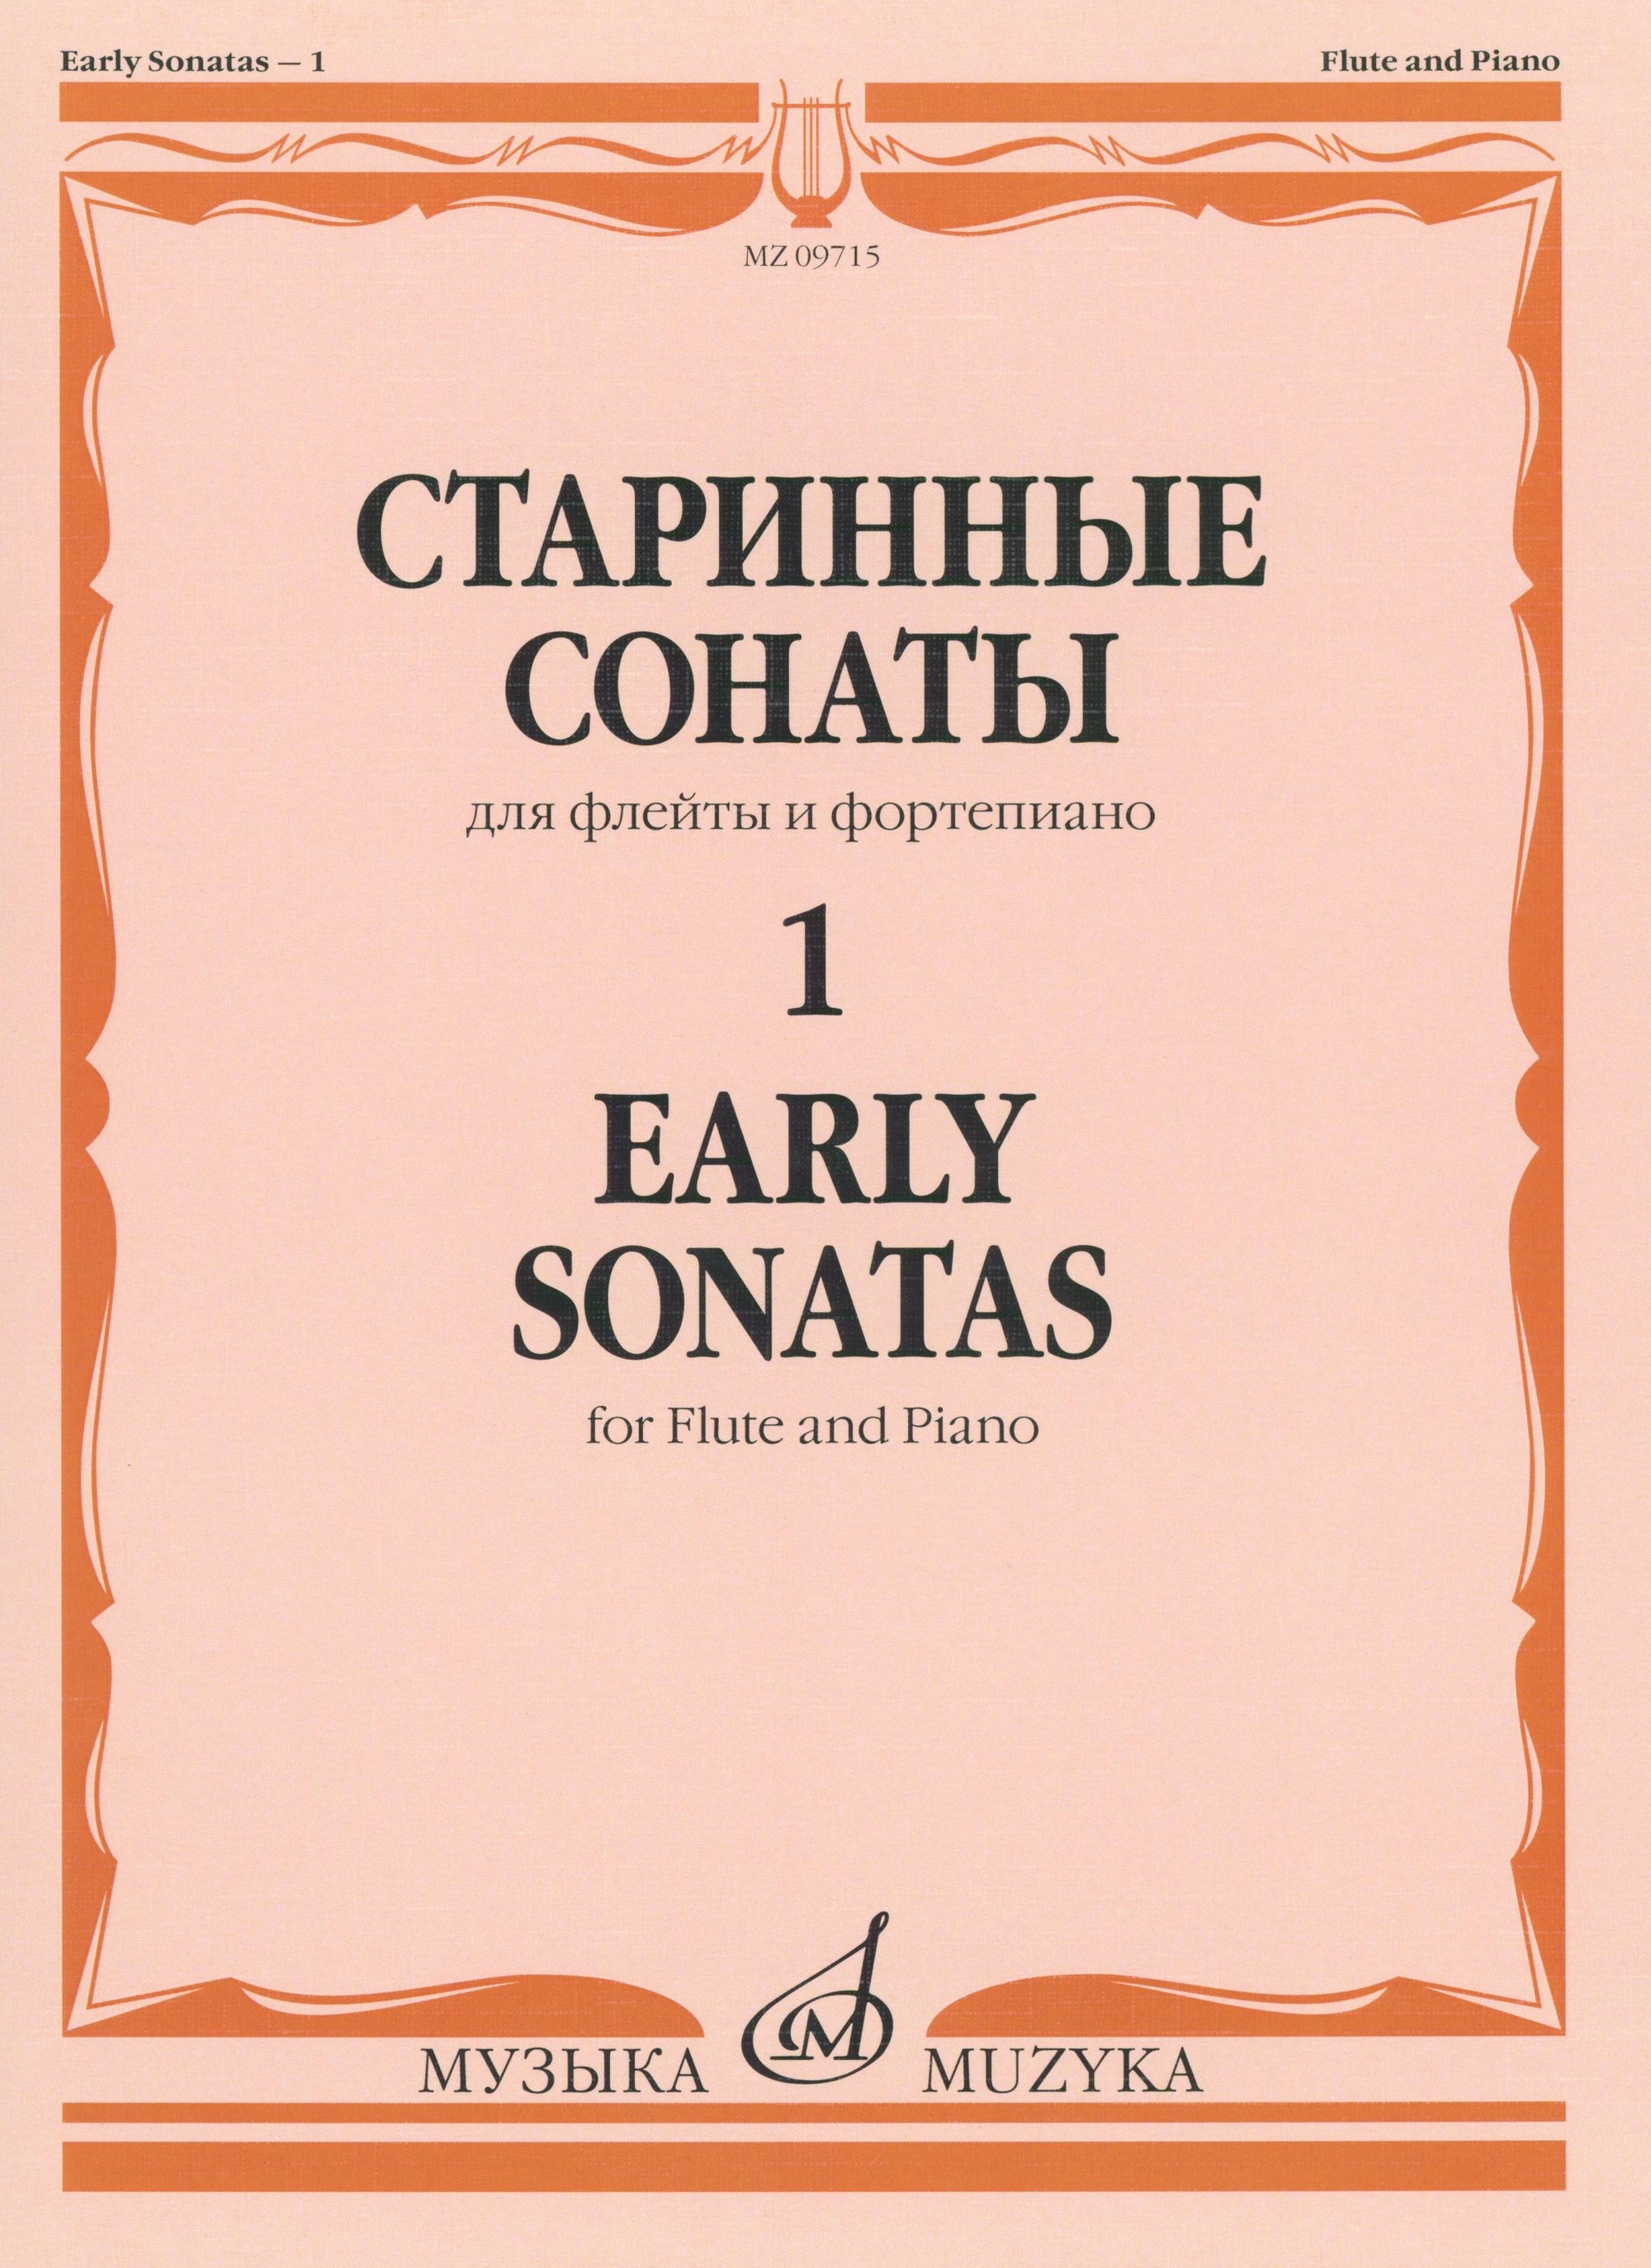 Early Flute Sonatas - Volume 1